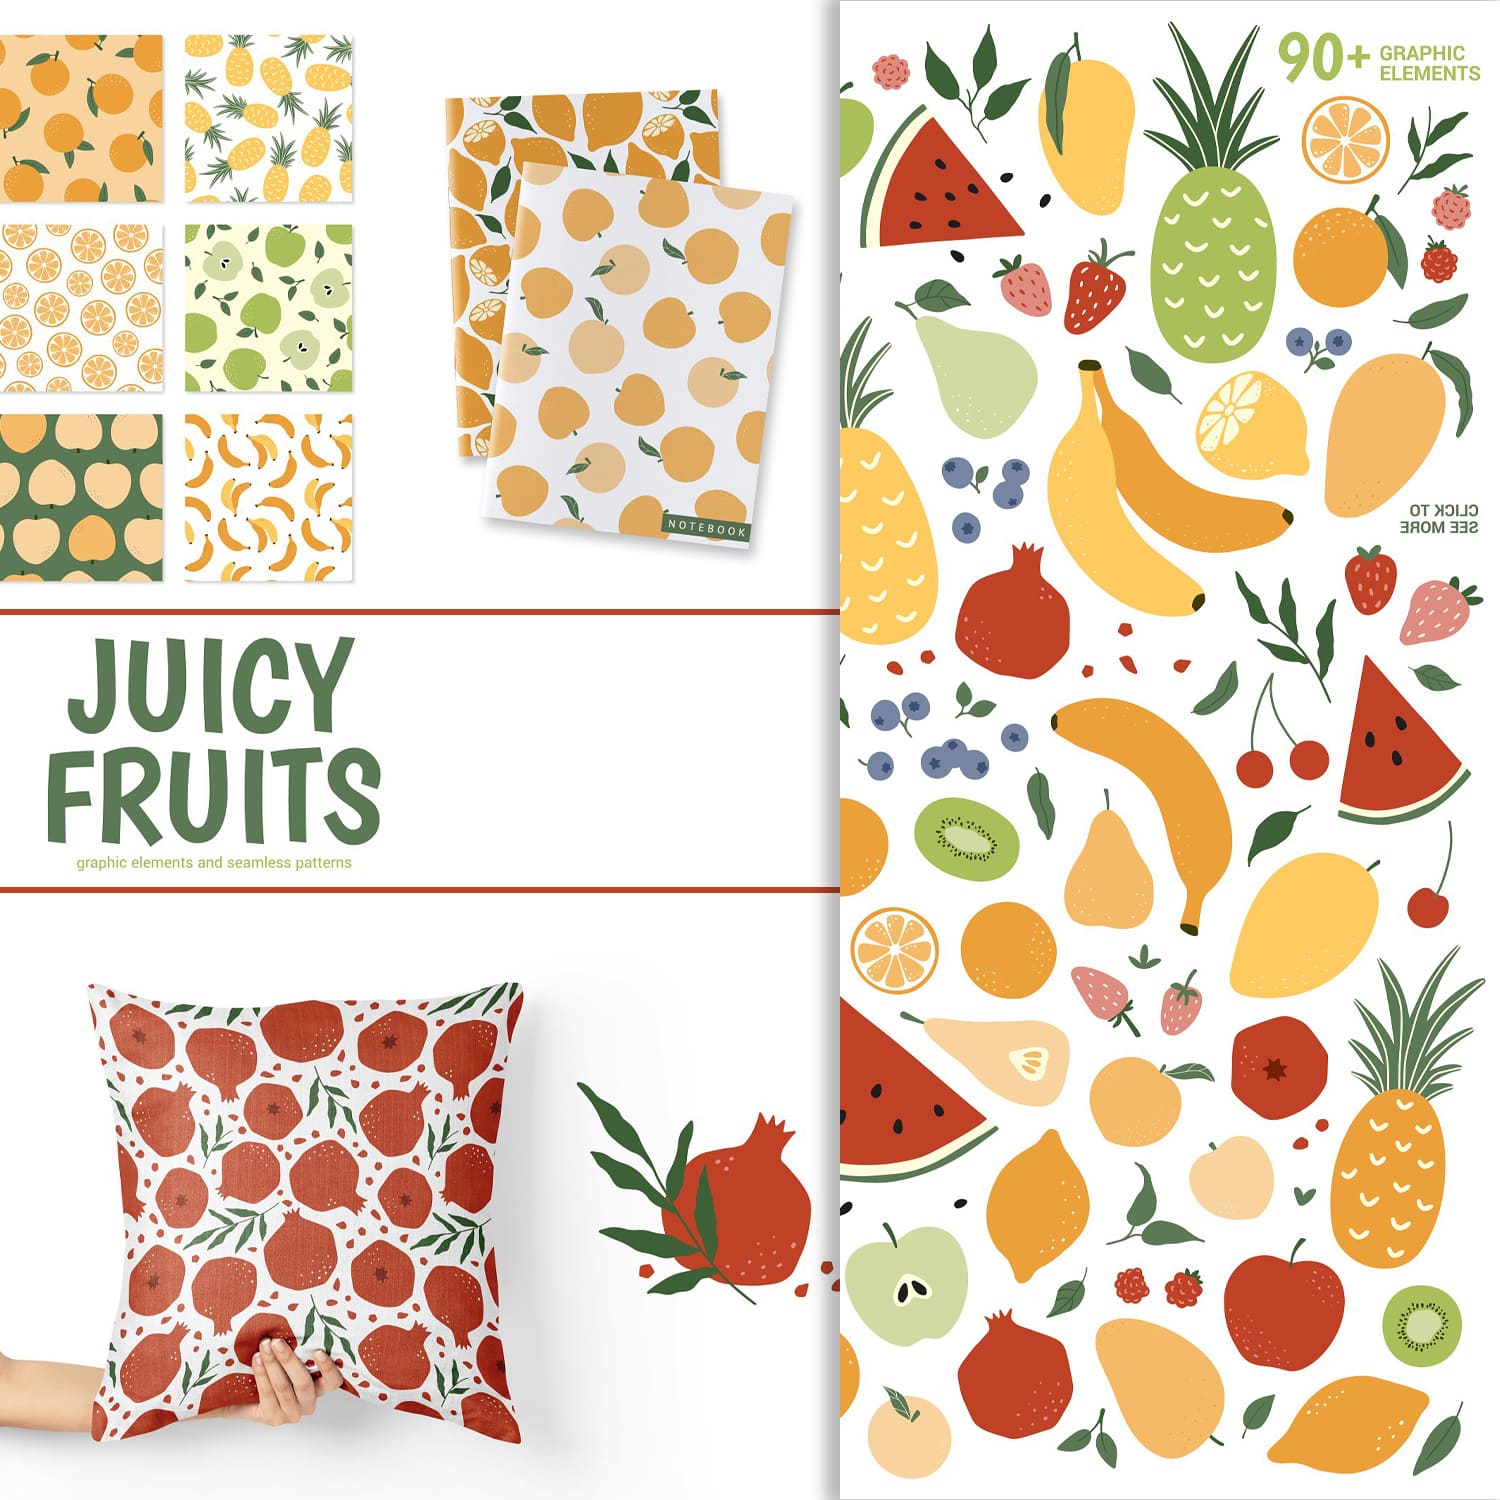 juicy fruits design.